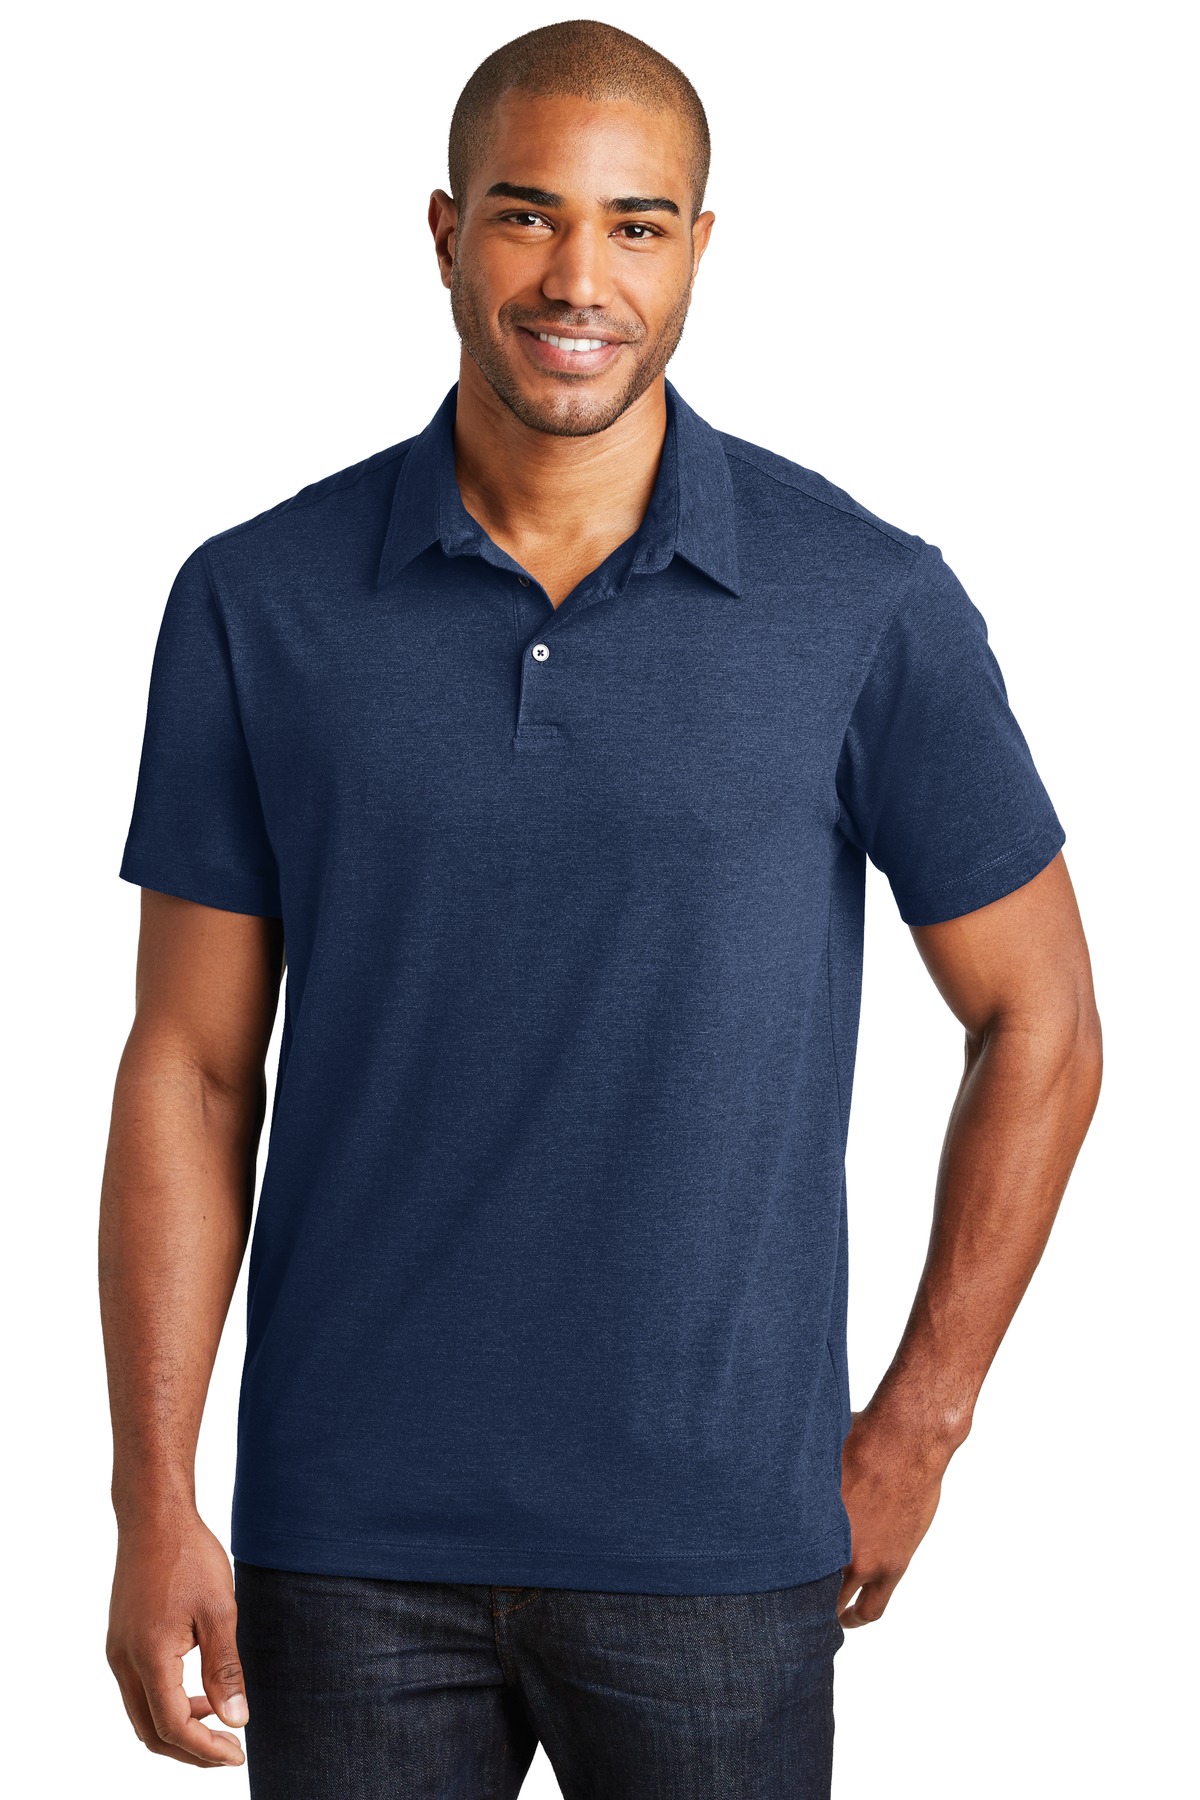 | K577 ShirtSpace Cotton Polo Port | Blend Authority Meridian